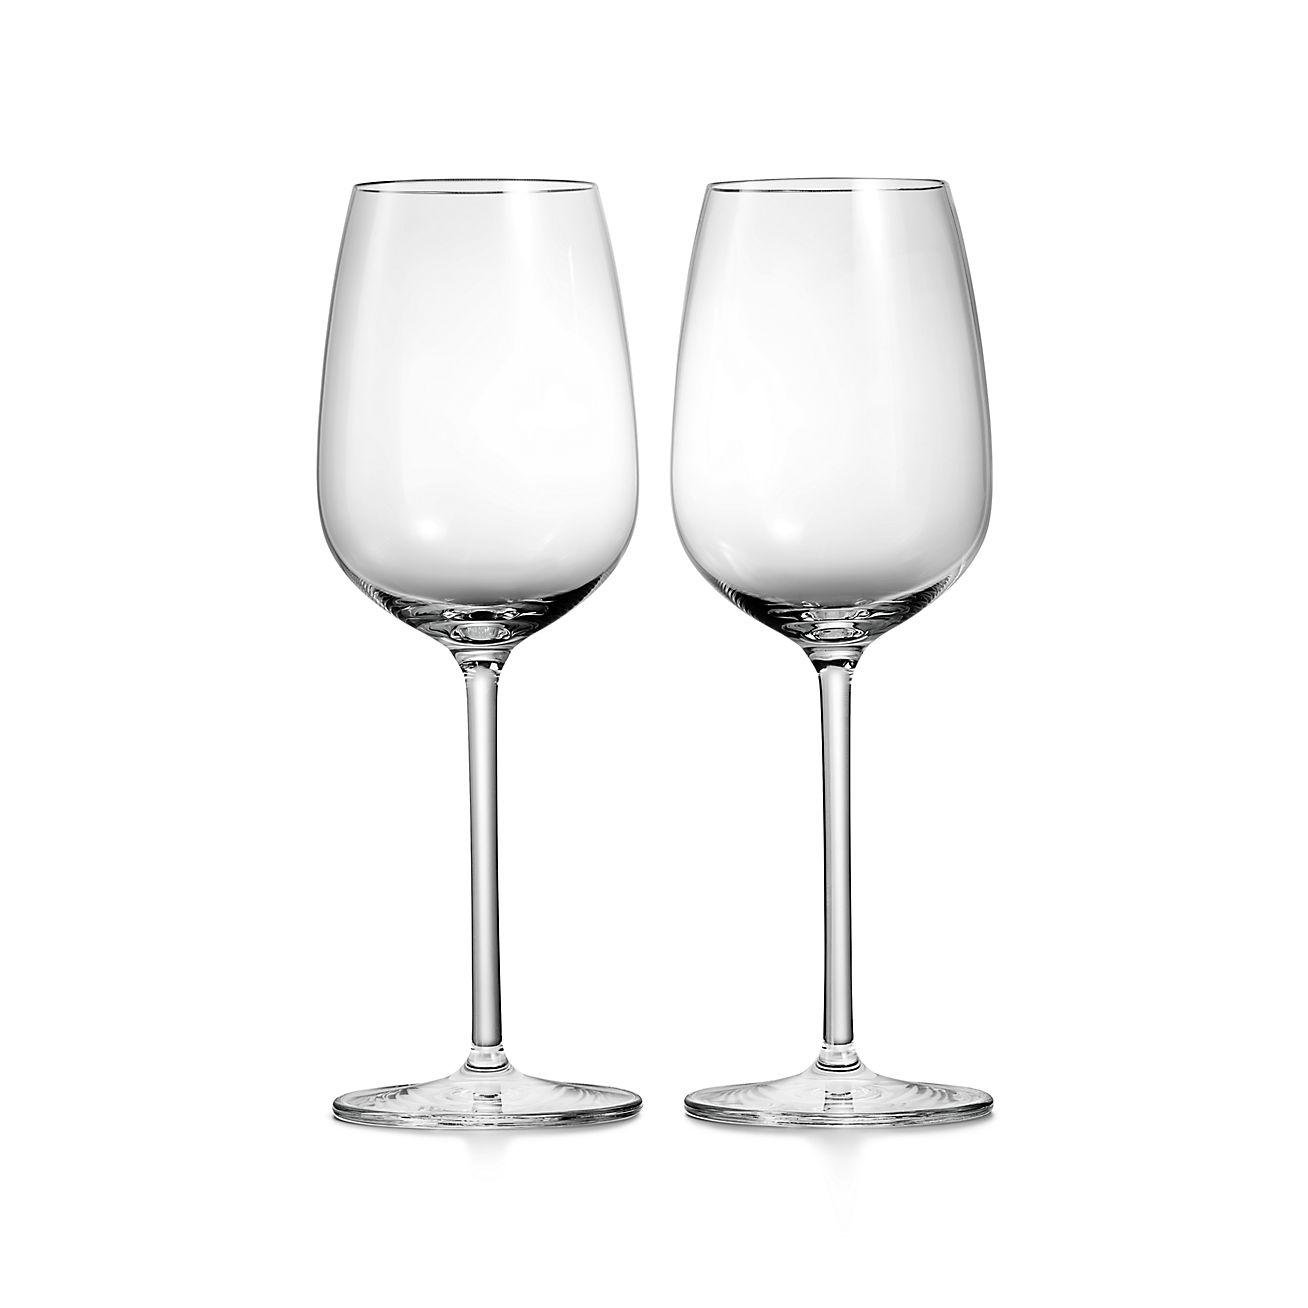 Tiffany Home Essentialsall Purpose White Wine Glasses 70223716 1055262 ED 